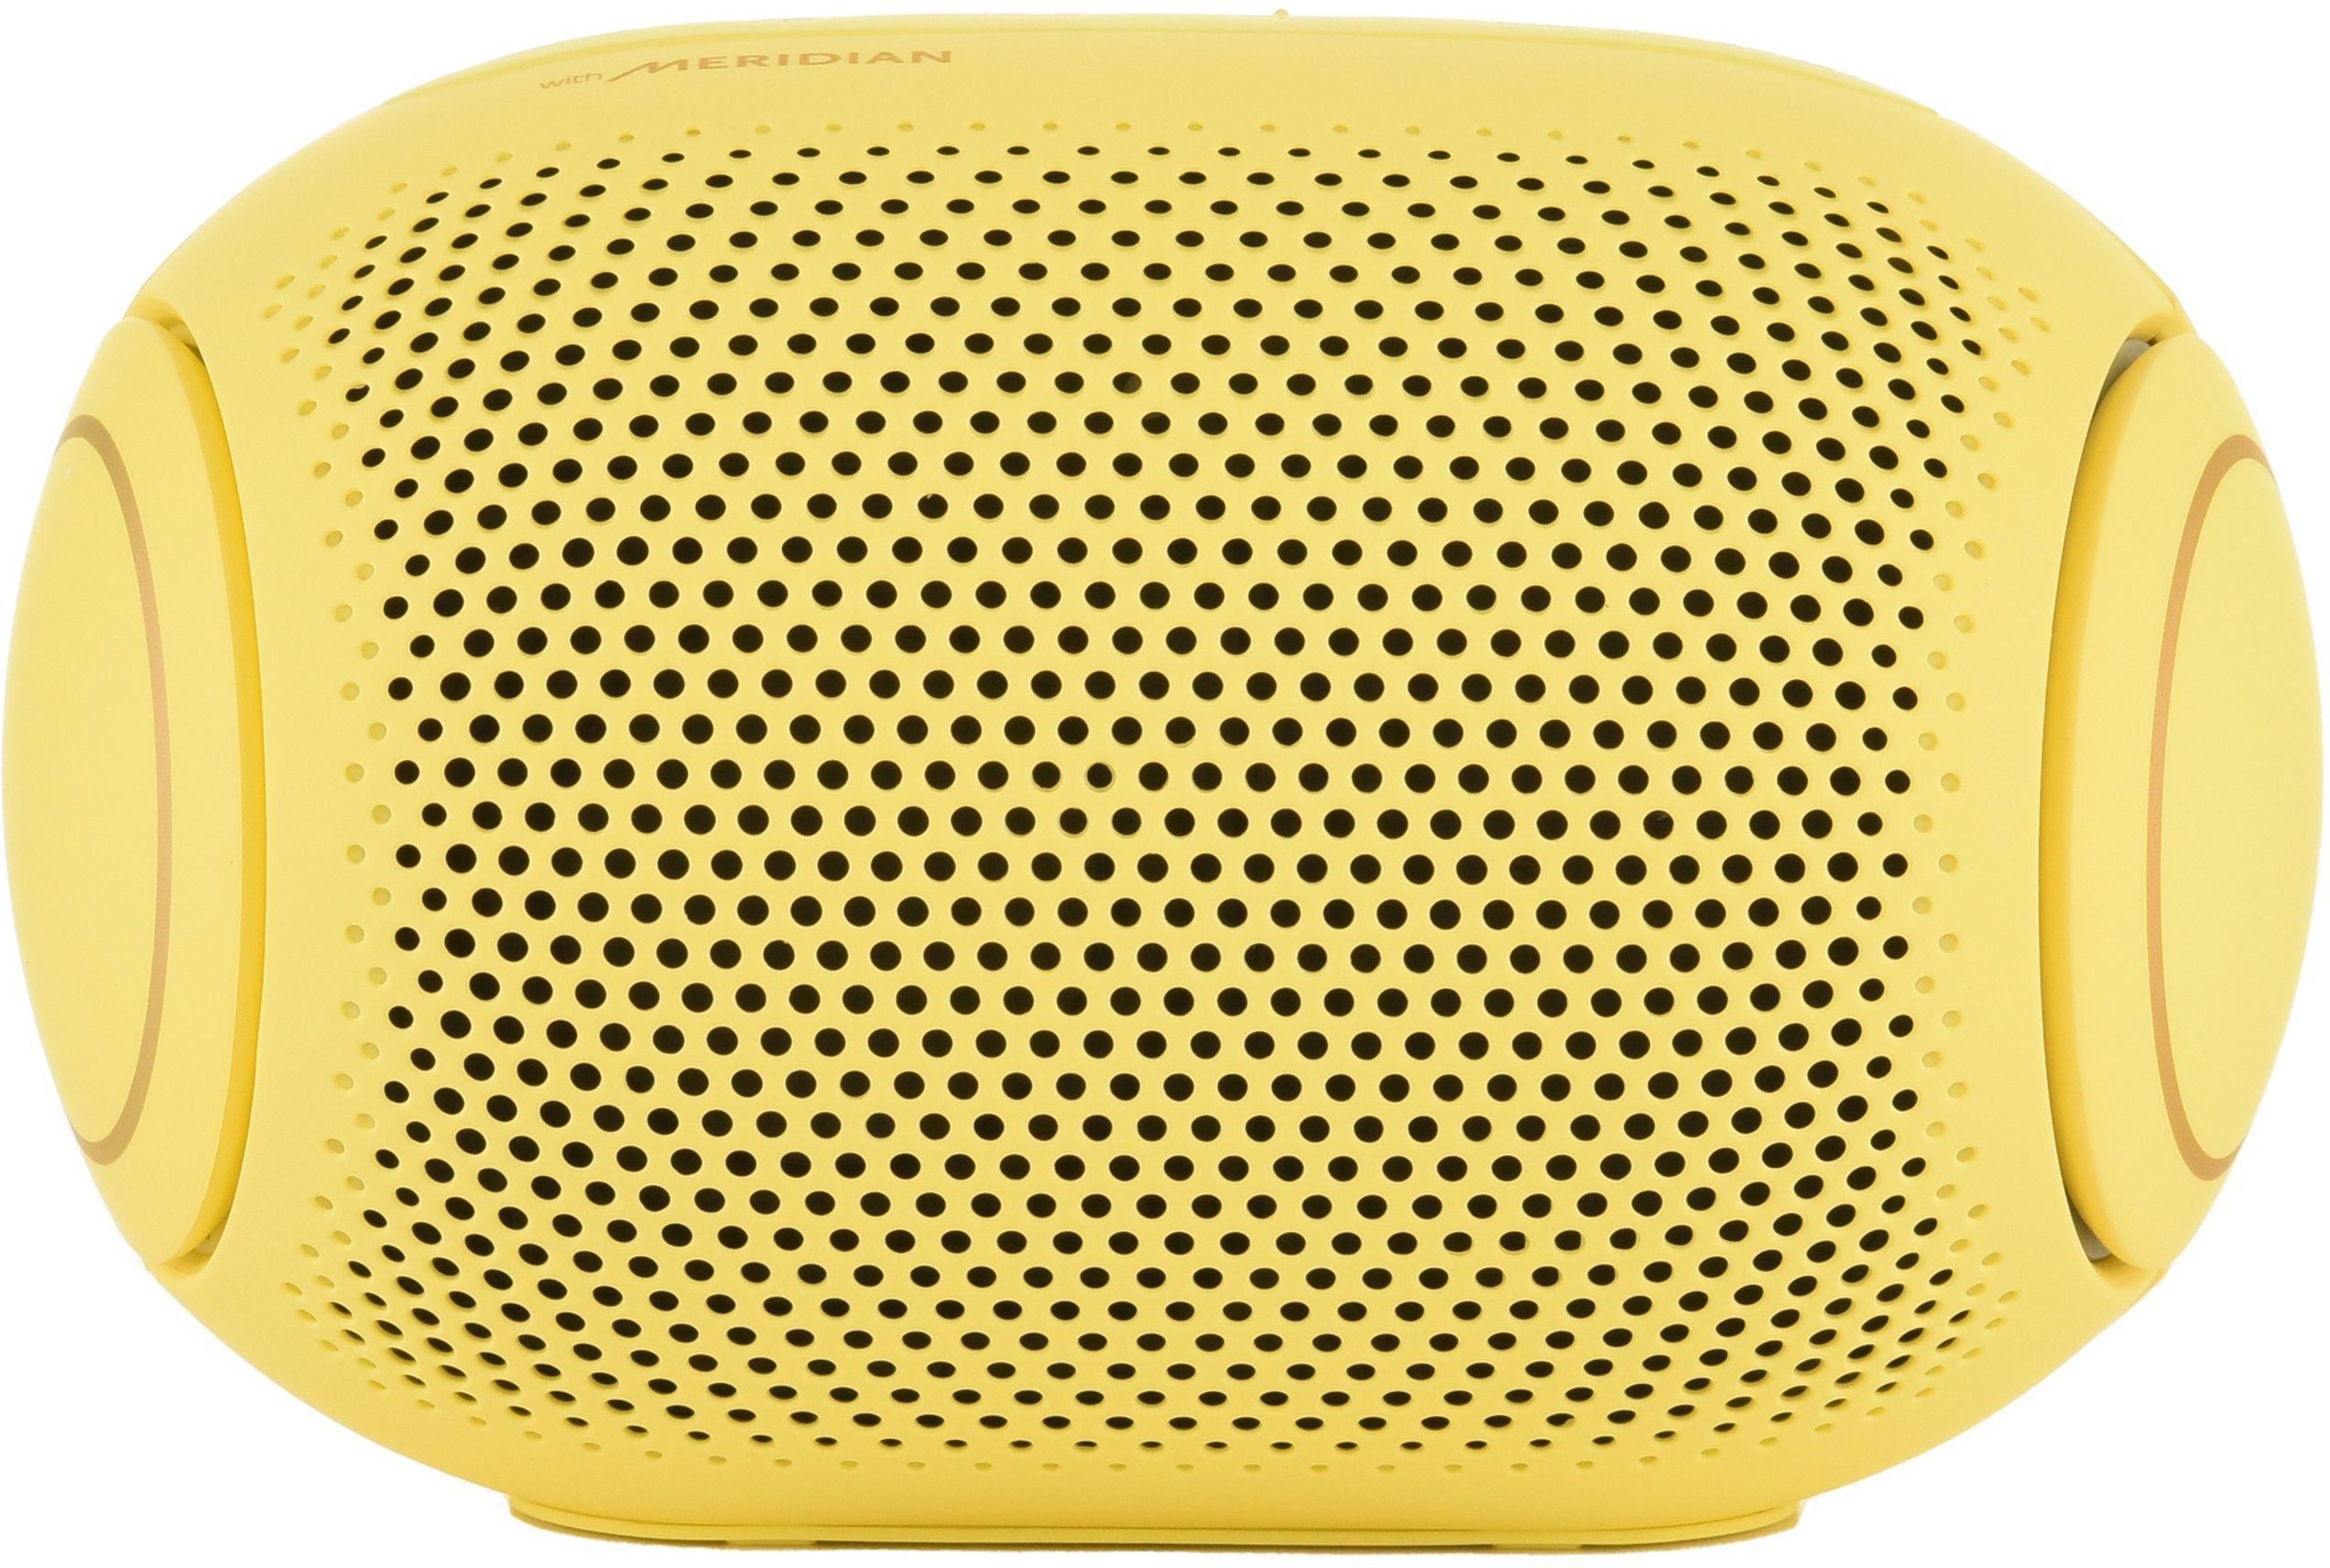 LG Xboom Go Pl2 Portable Bluetooth Speaker With Meridian Audio Technology, Sour Lemon